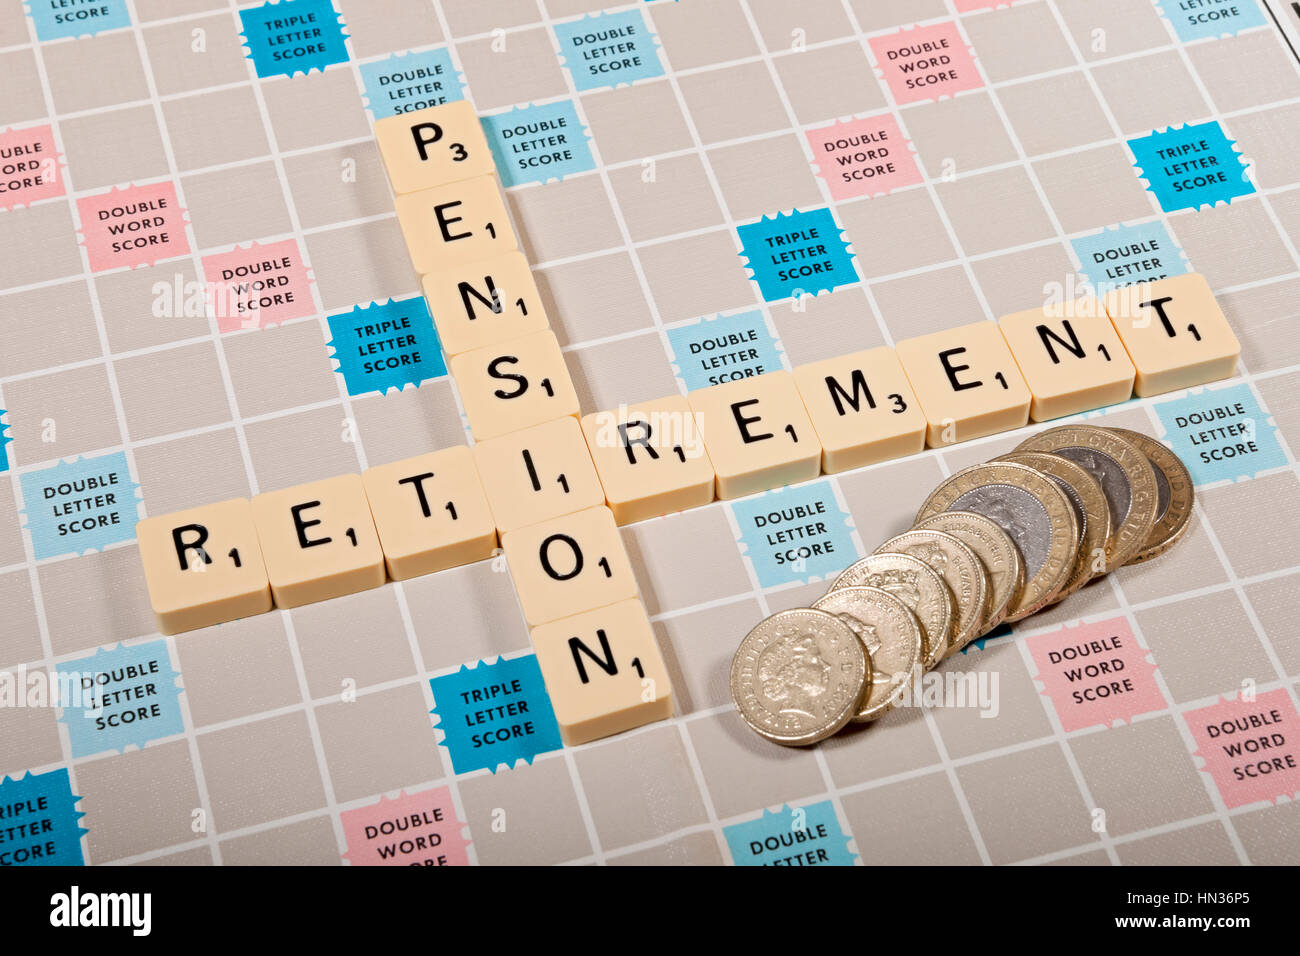 Pension concept. Stock Photo